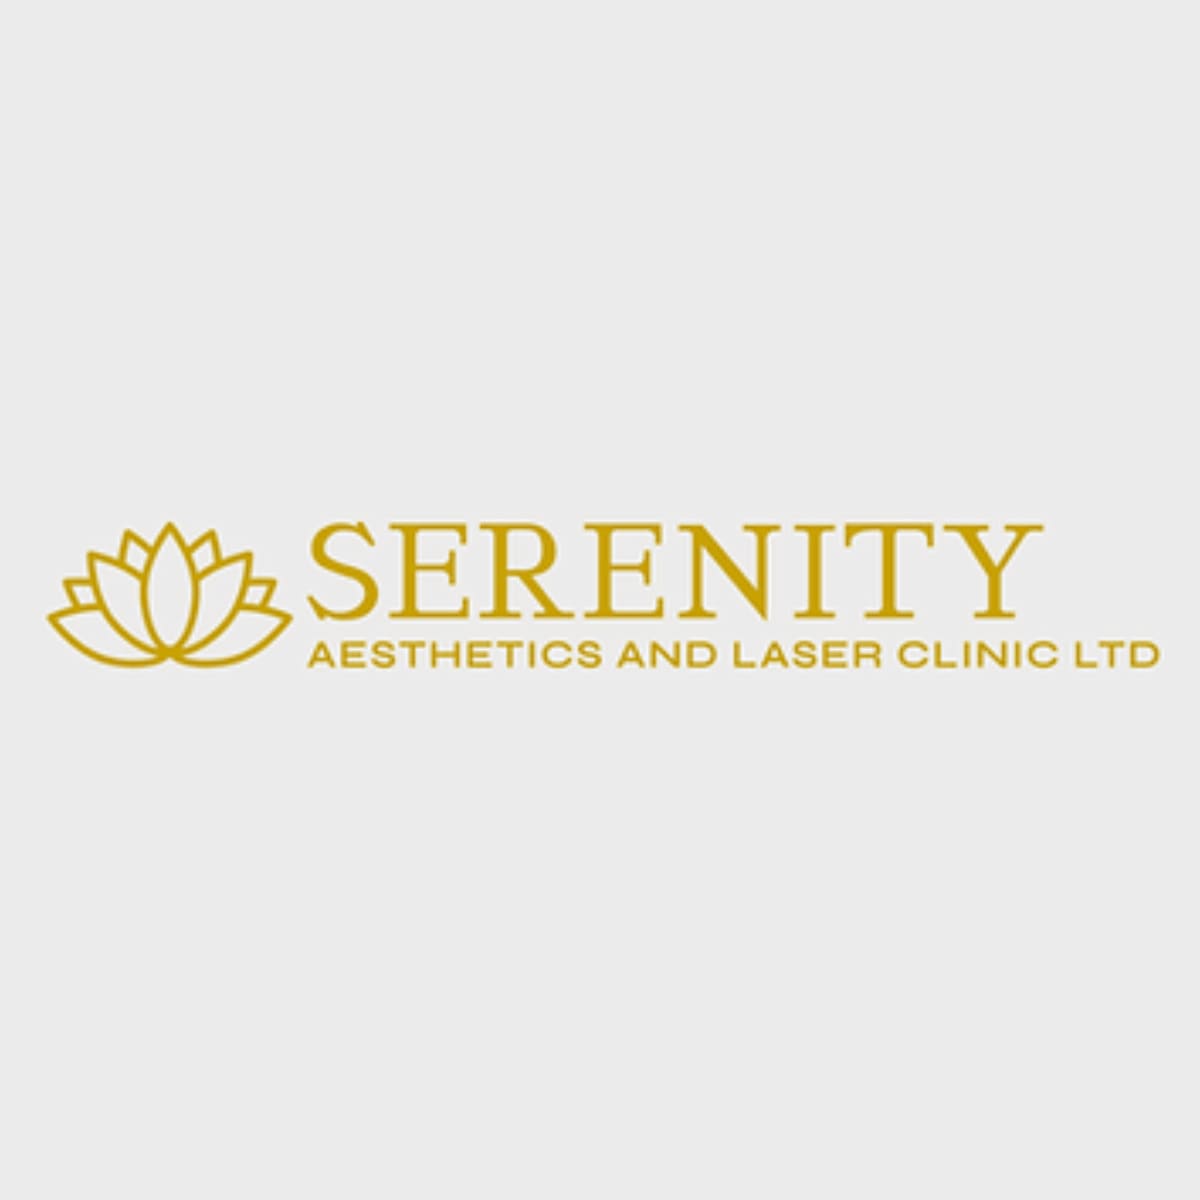 LOGO Serenity Aesthetics and Laser Clinic Ltd Mansfield 07888 734655